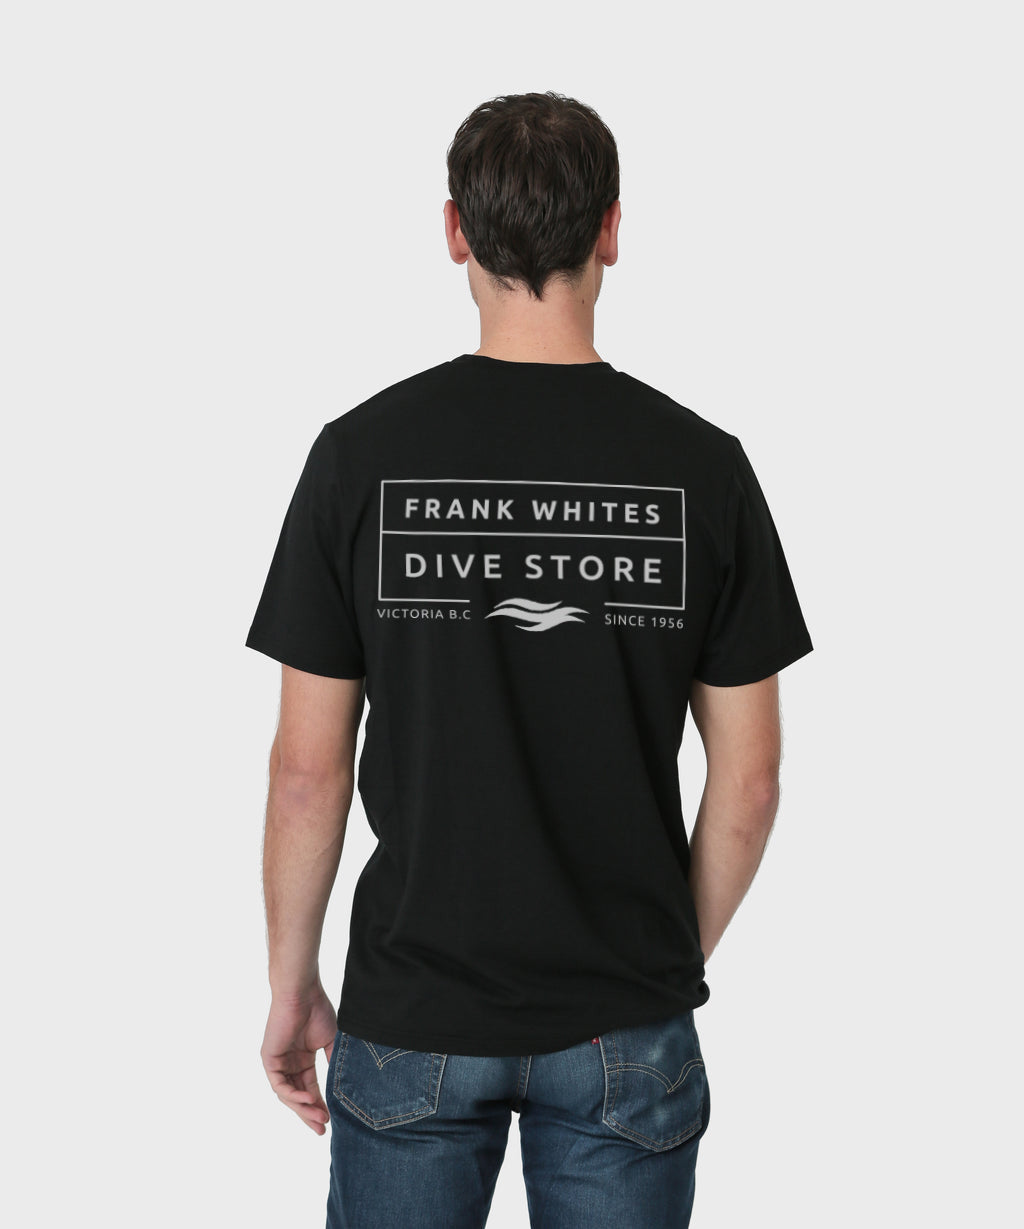 Frank Whites T-Shirt – Frank Whites Dive Store